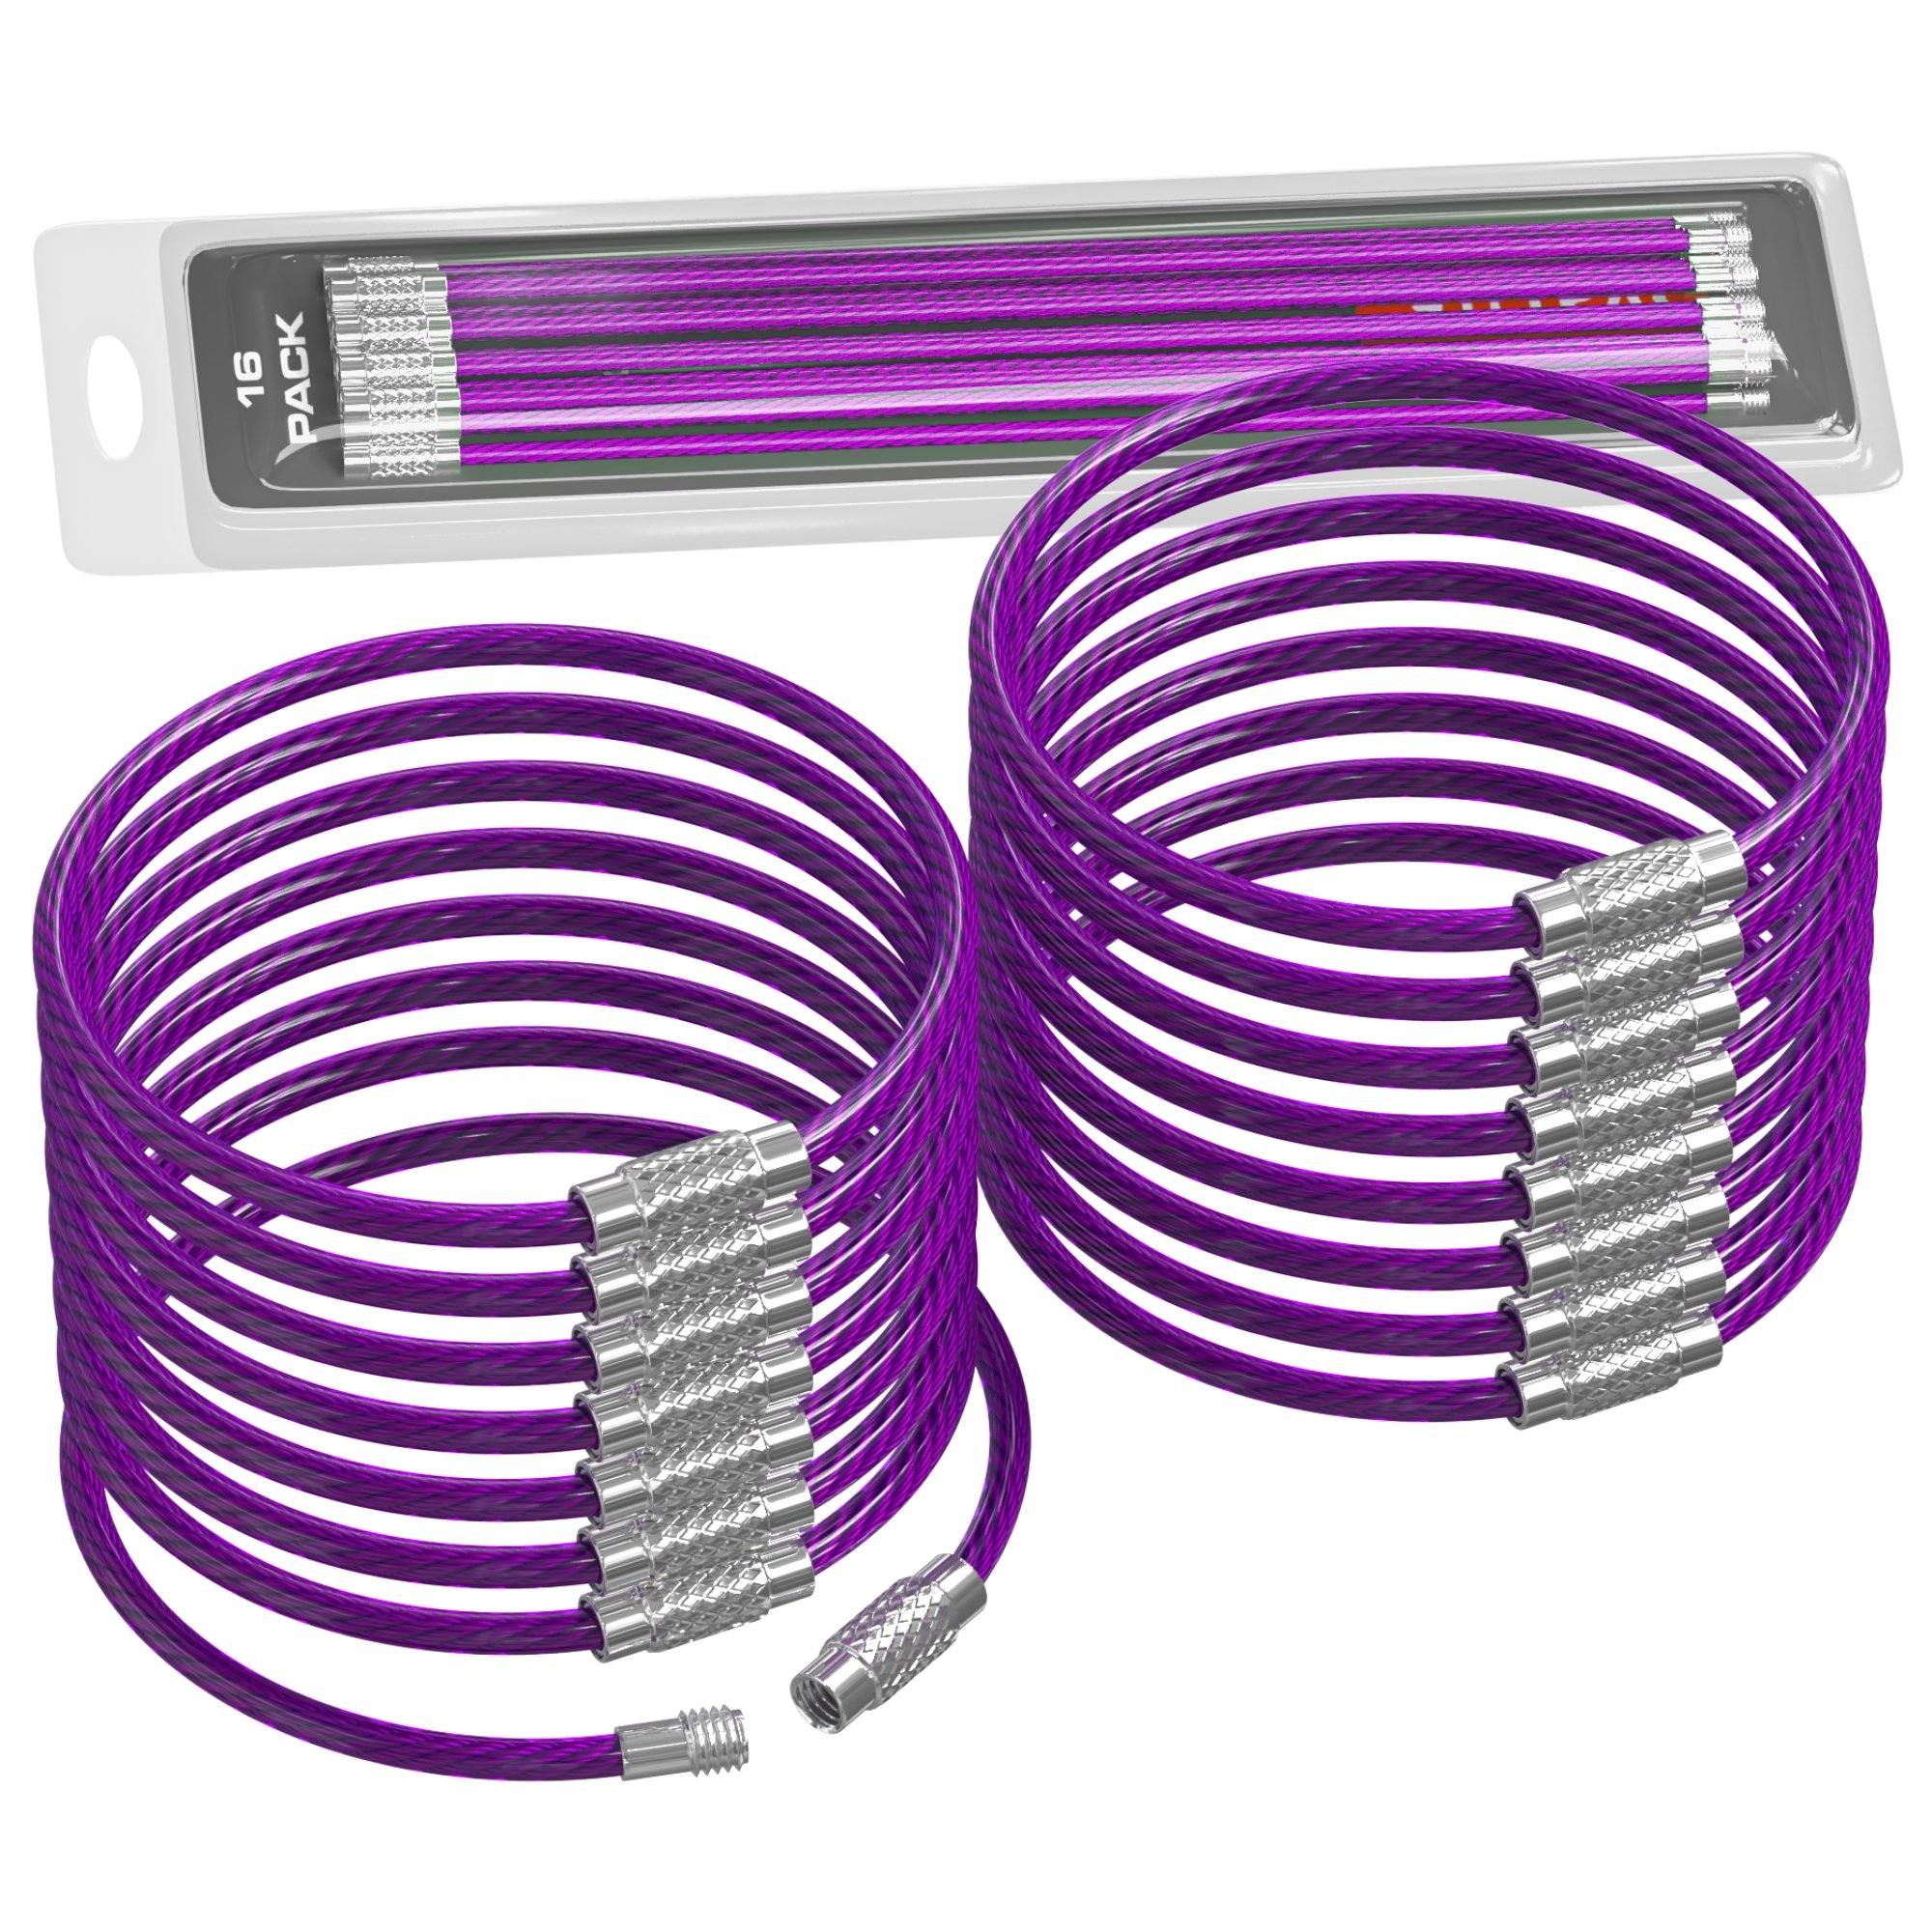 Silipac 6.3" Twist Lock Cable Ring 16 pcs 2mm - Silipac